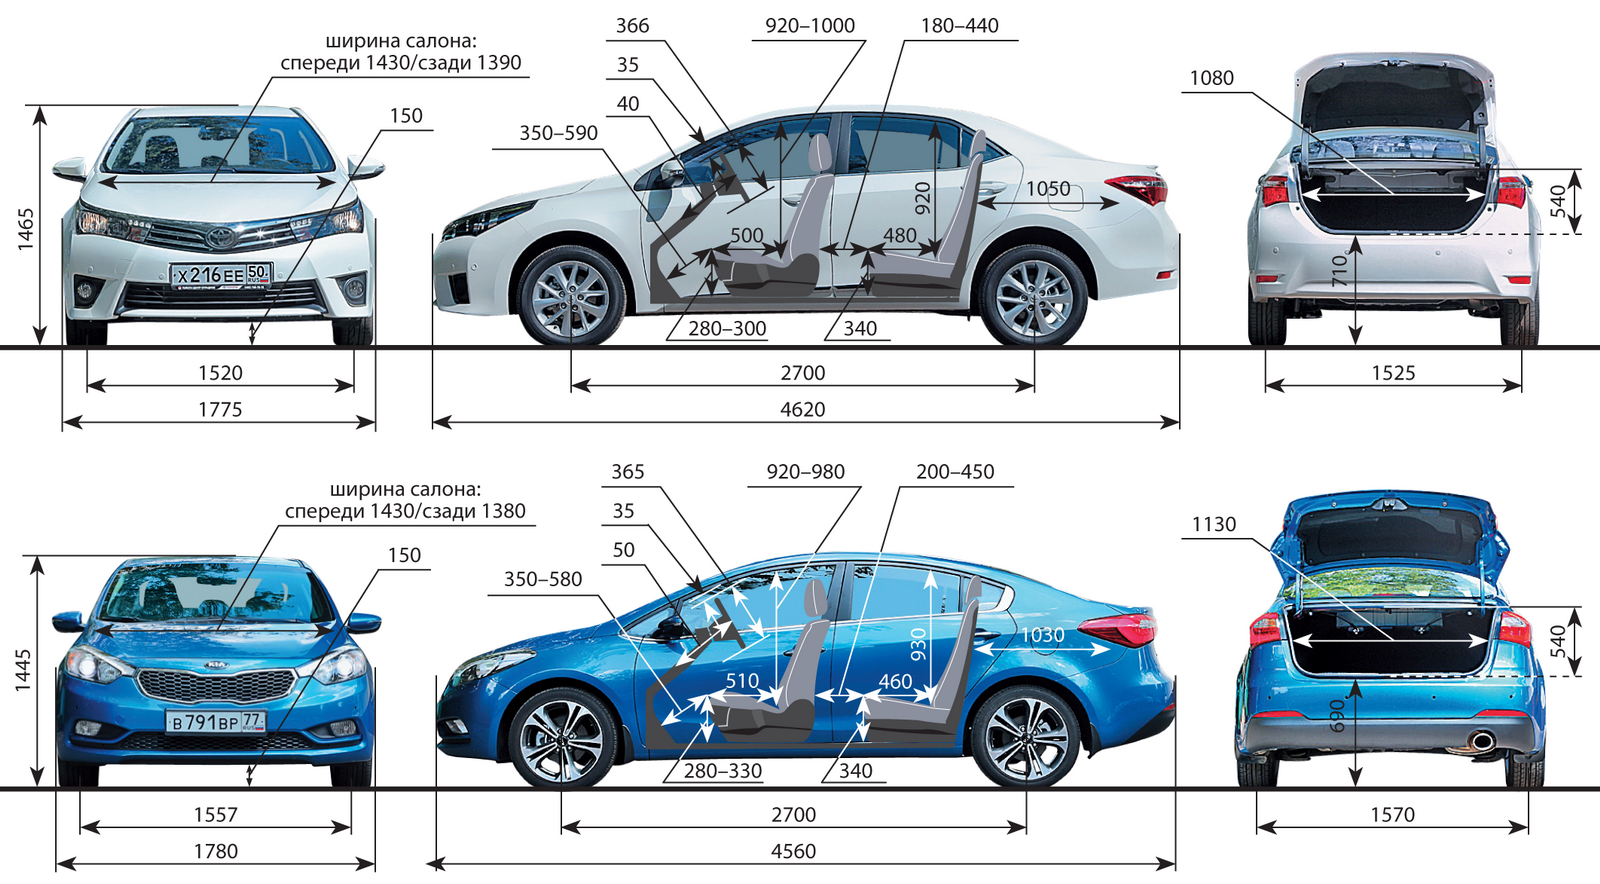 Тойота королла 2013-2015 года и ее технические характеристики